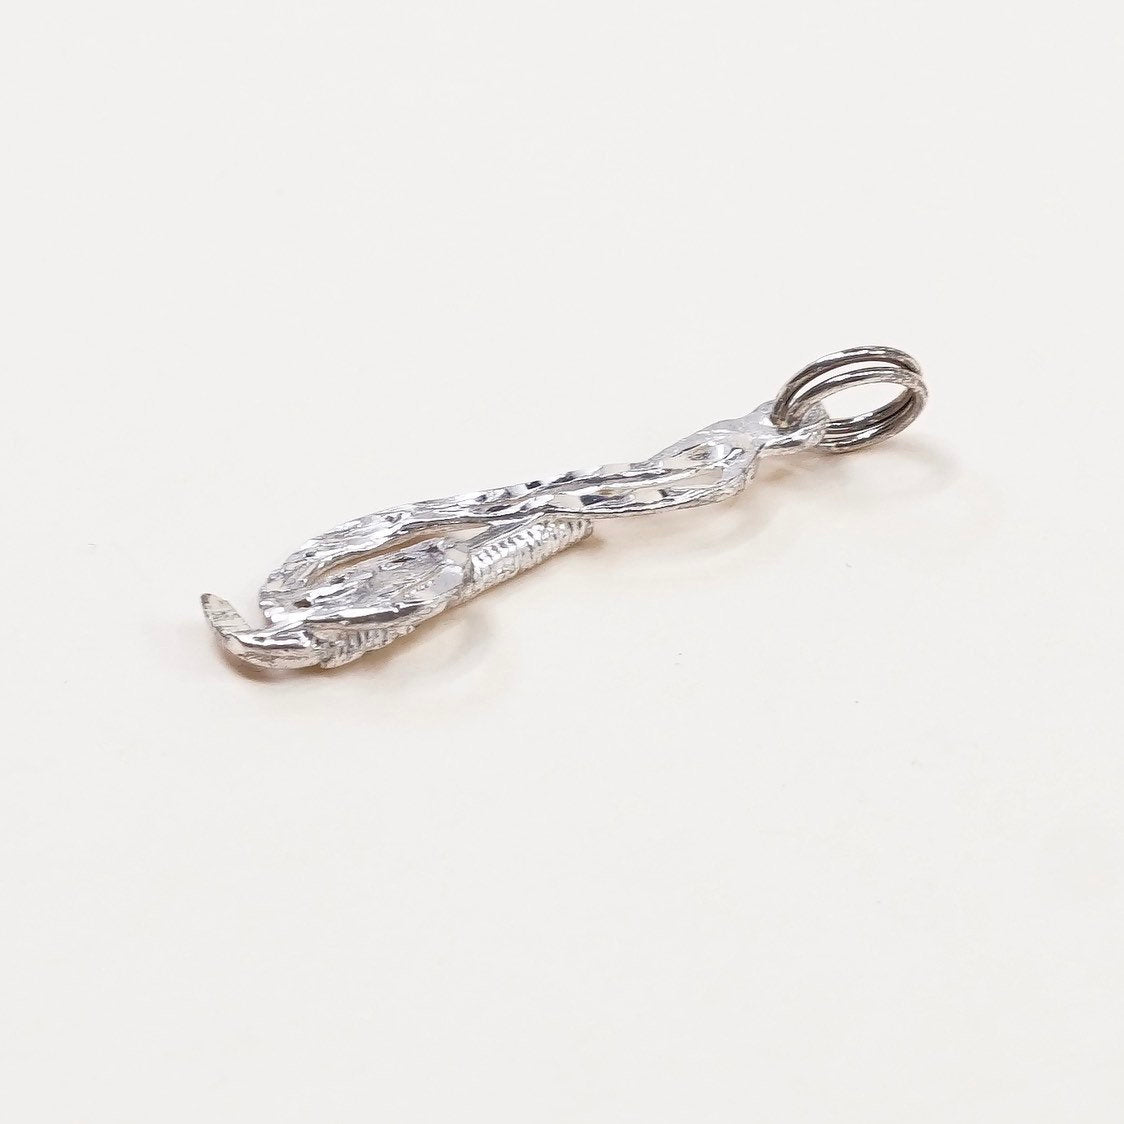 VTG sterling silver handmade pendant, 925 music note, melody charm